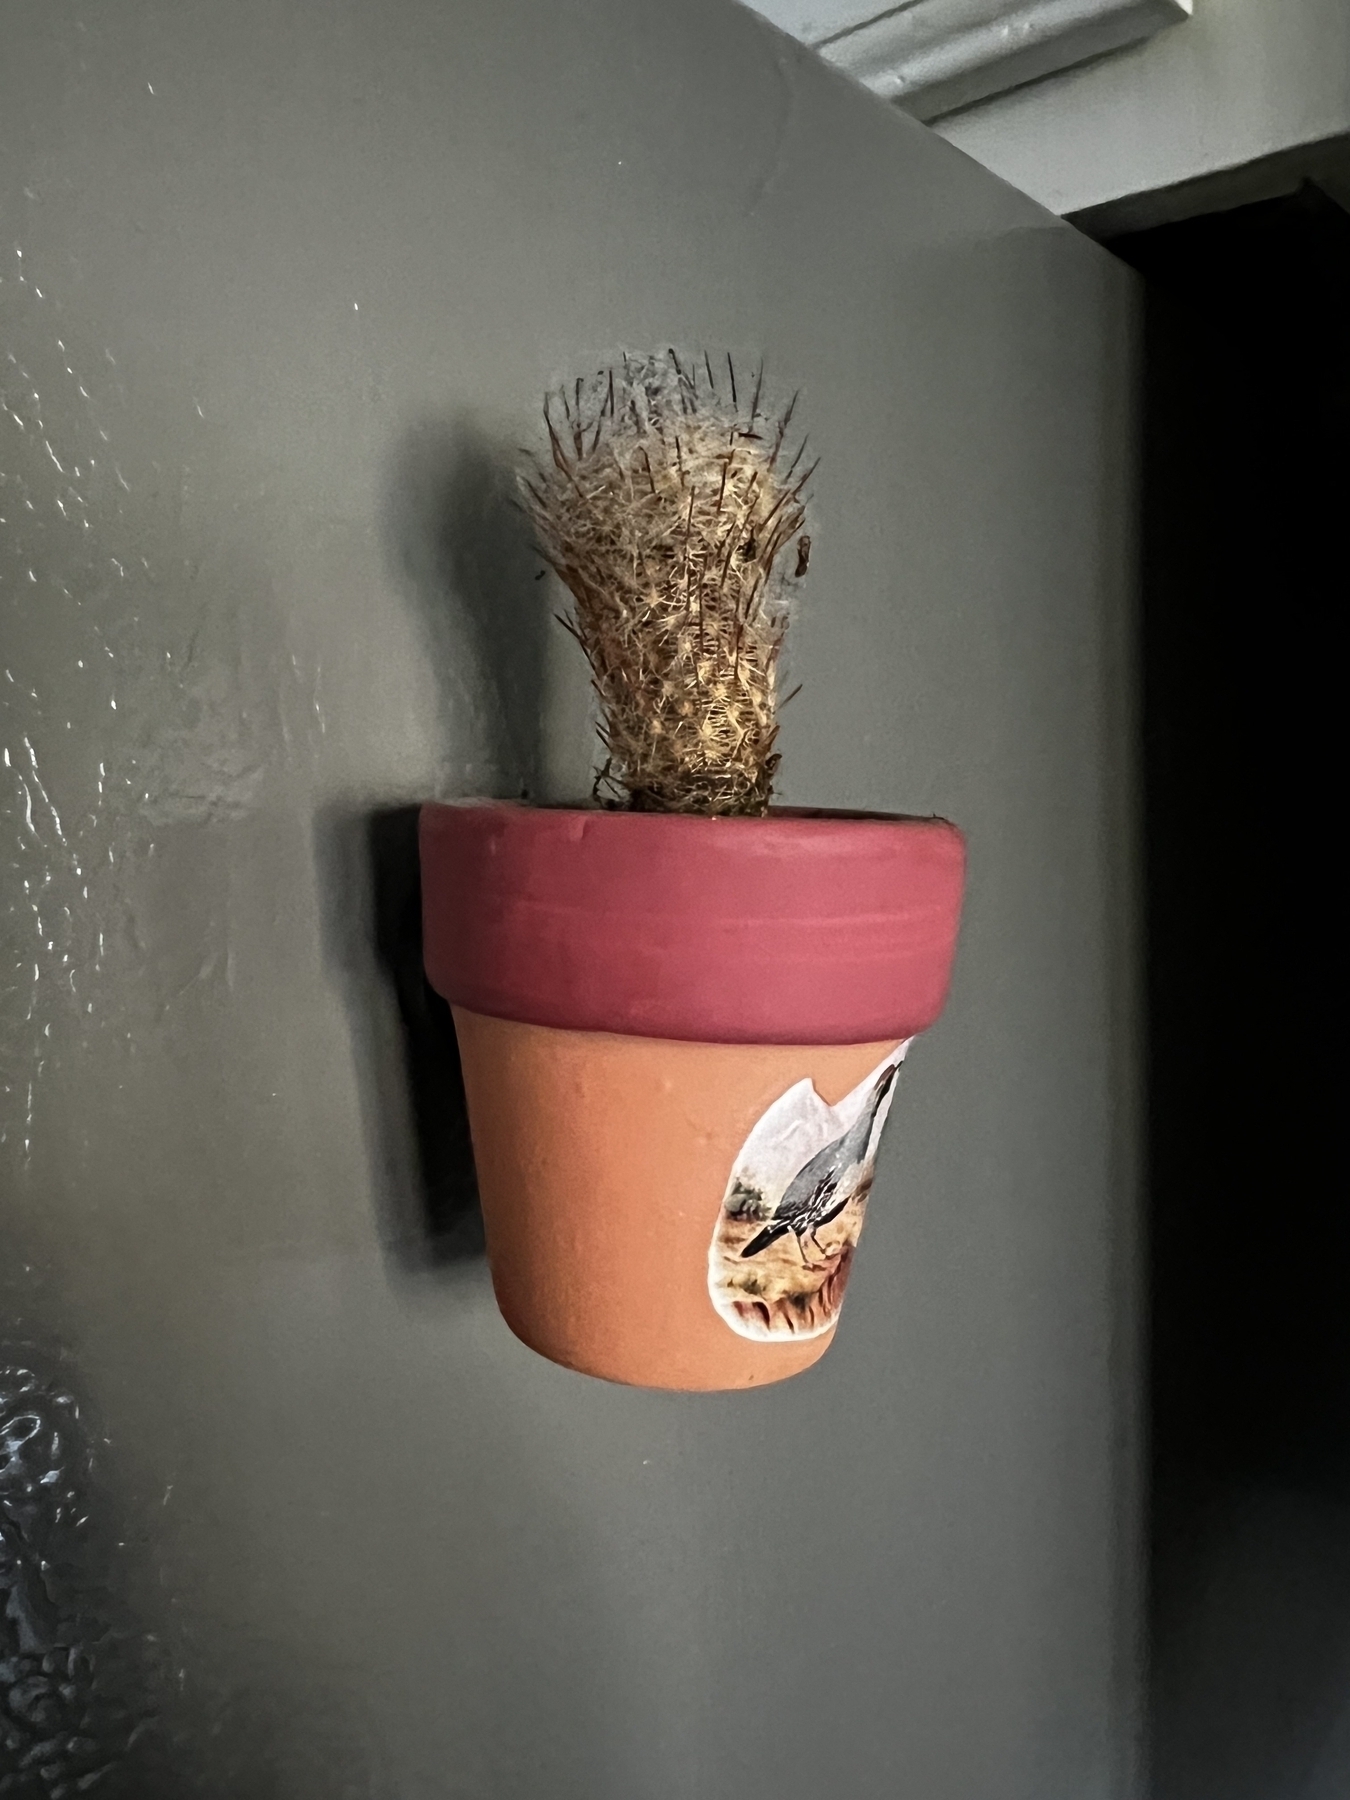 Small, dead cactus in a refrigerator magnet pot. 